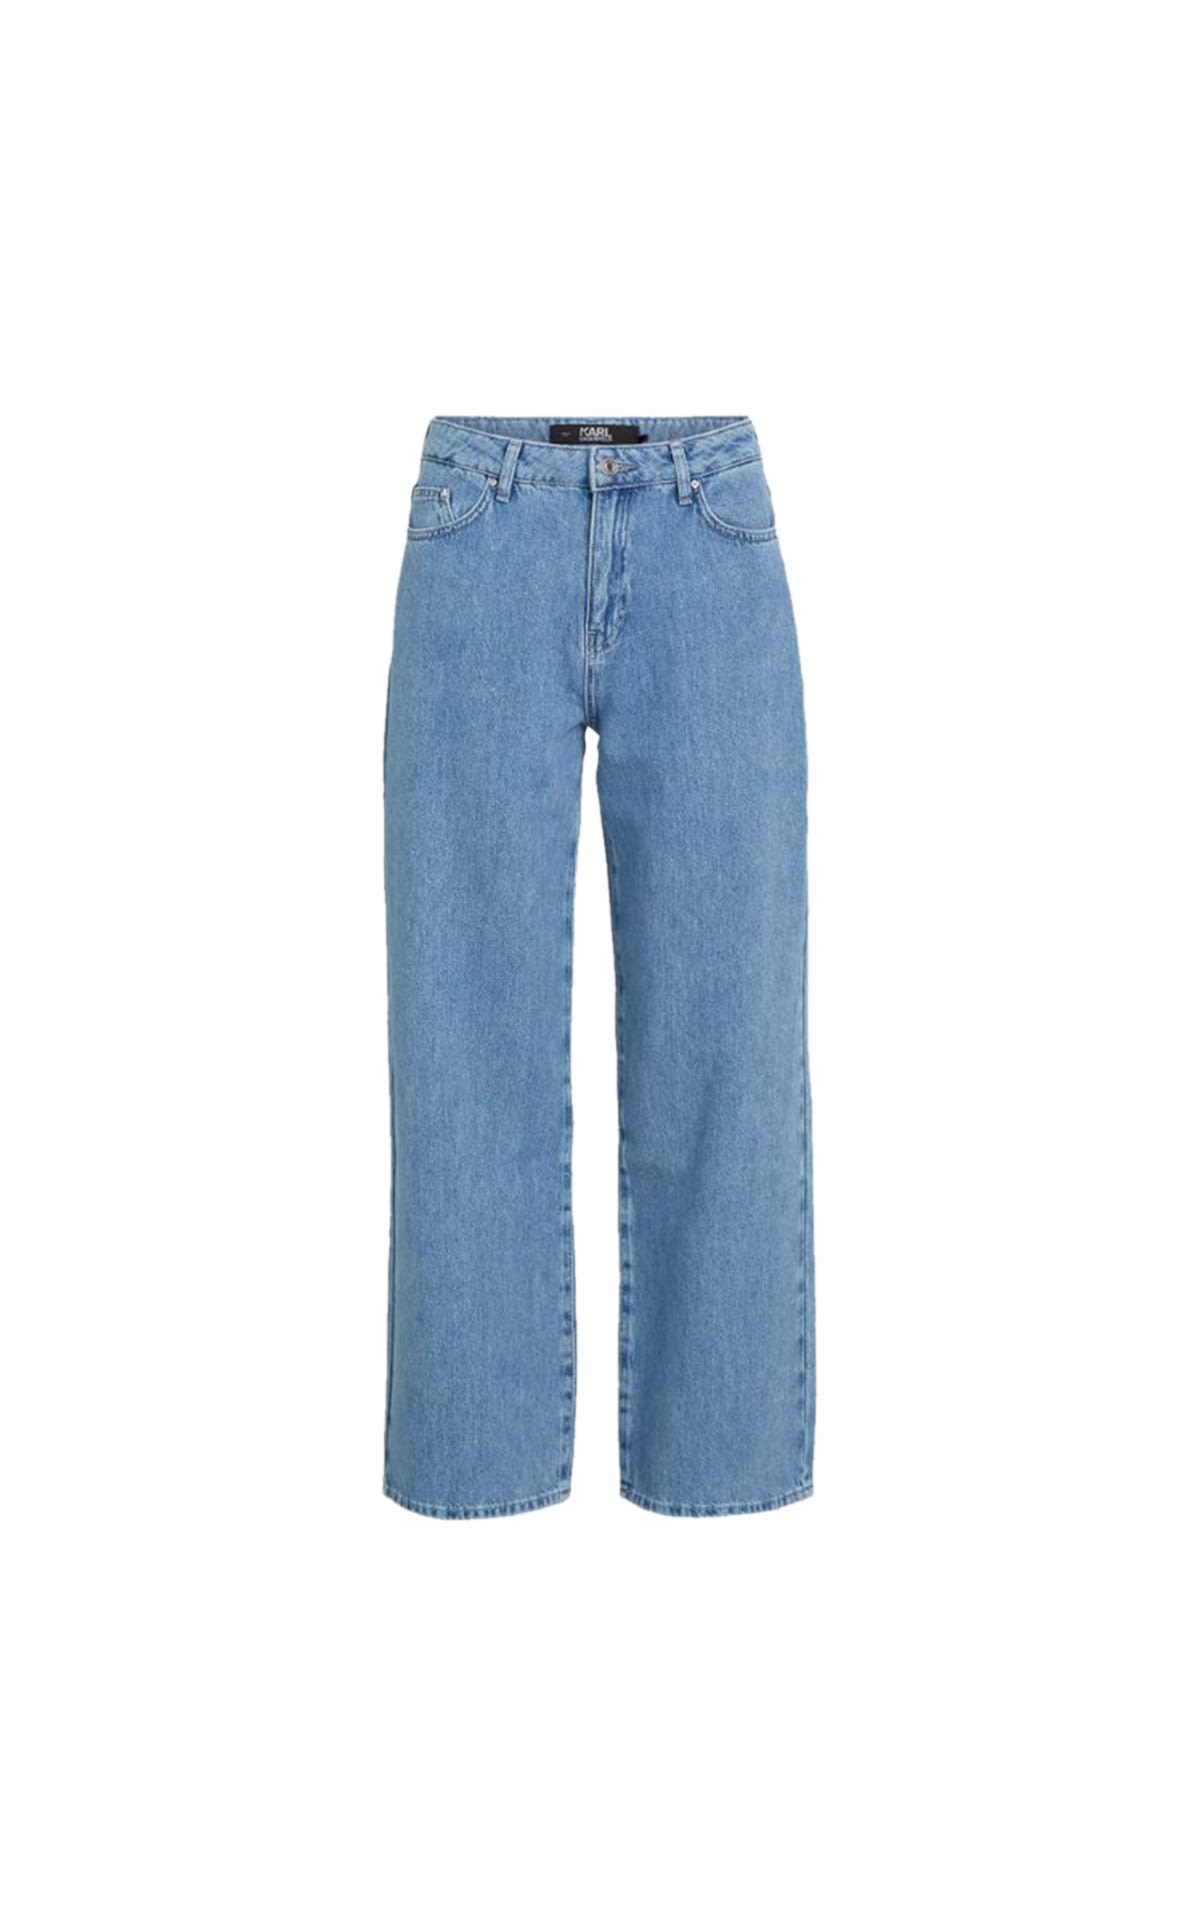 Karl Lagerfeld jeans